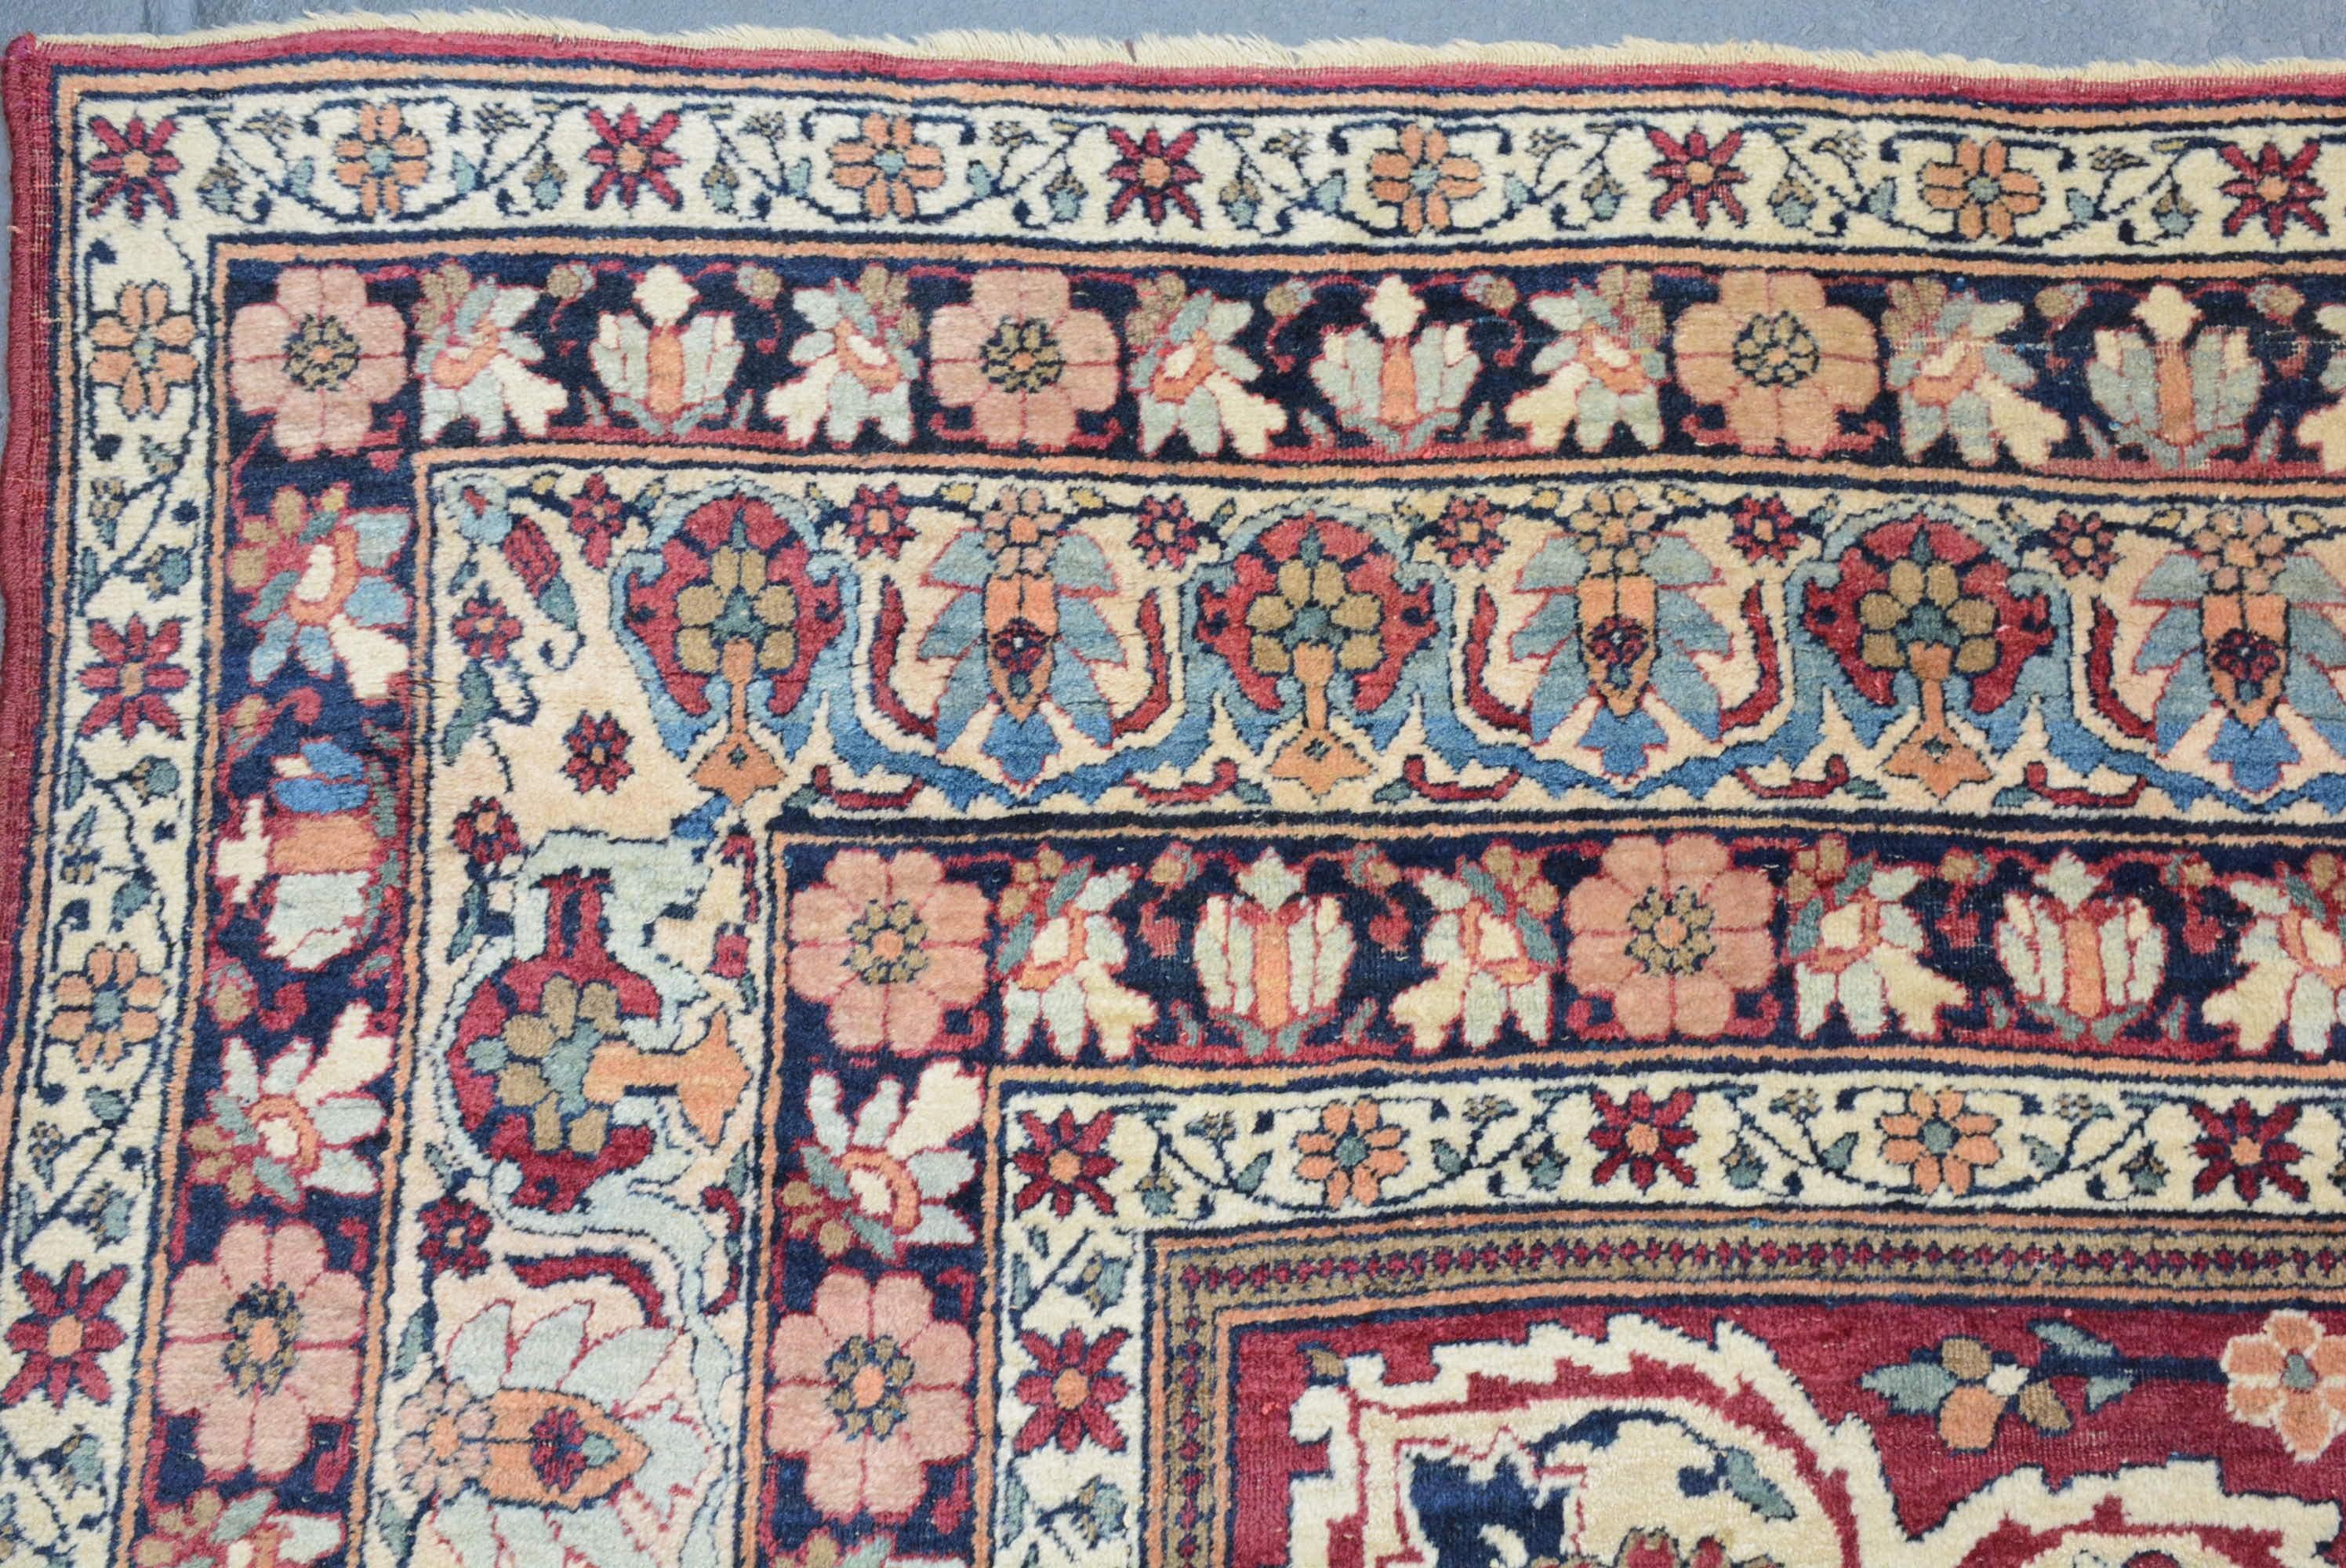 Woven Late 19th Century Lavar Kerman Carpet For Sale